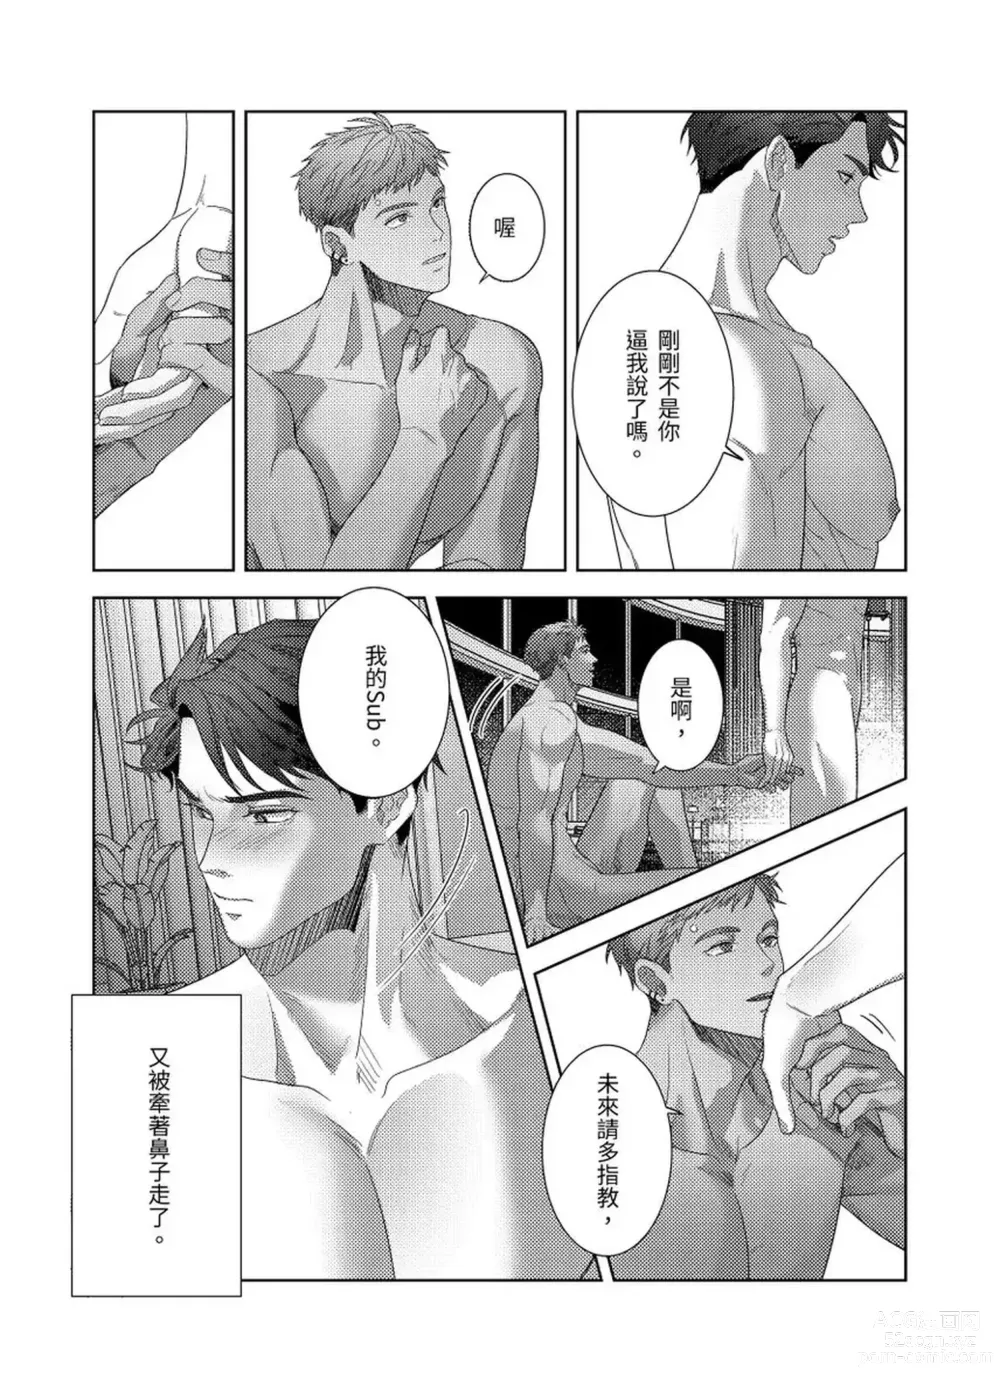 Page 56 of manga Dom&Sub